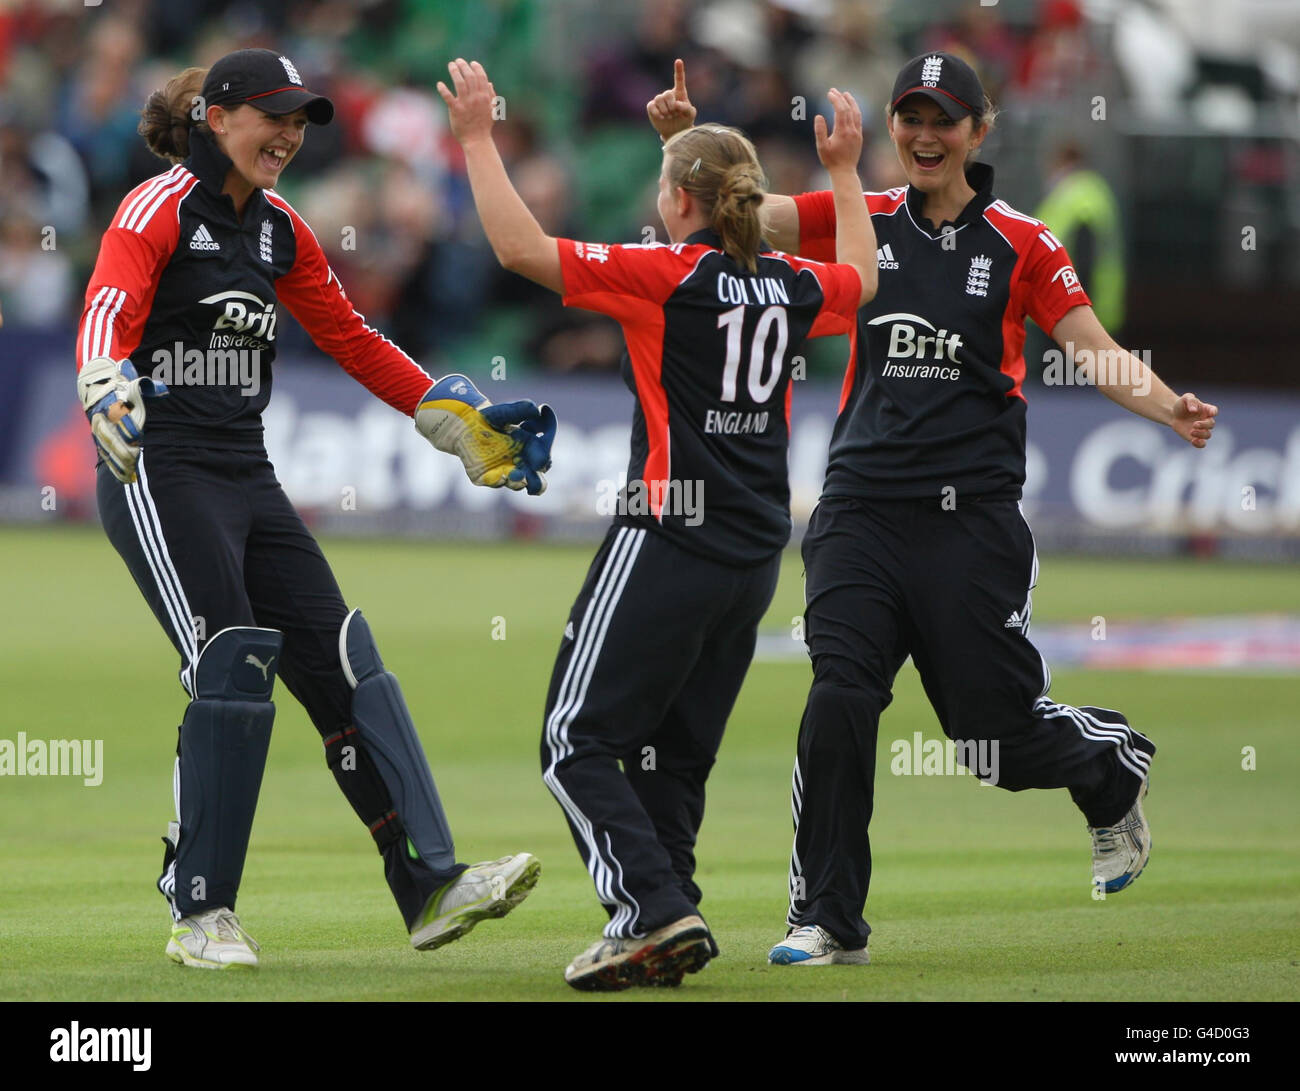 Cricket - Natwest donne venti quadrangolare20 - Inghilterra v Australia - County Ground Foto Stock